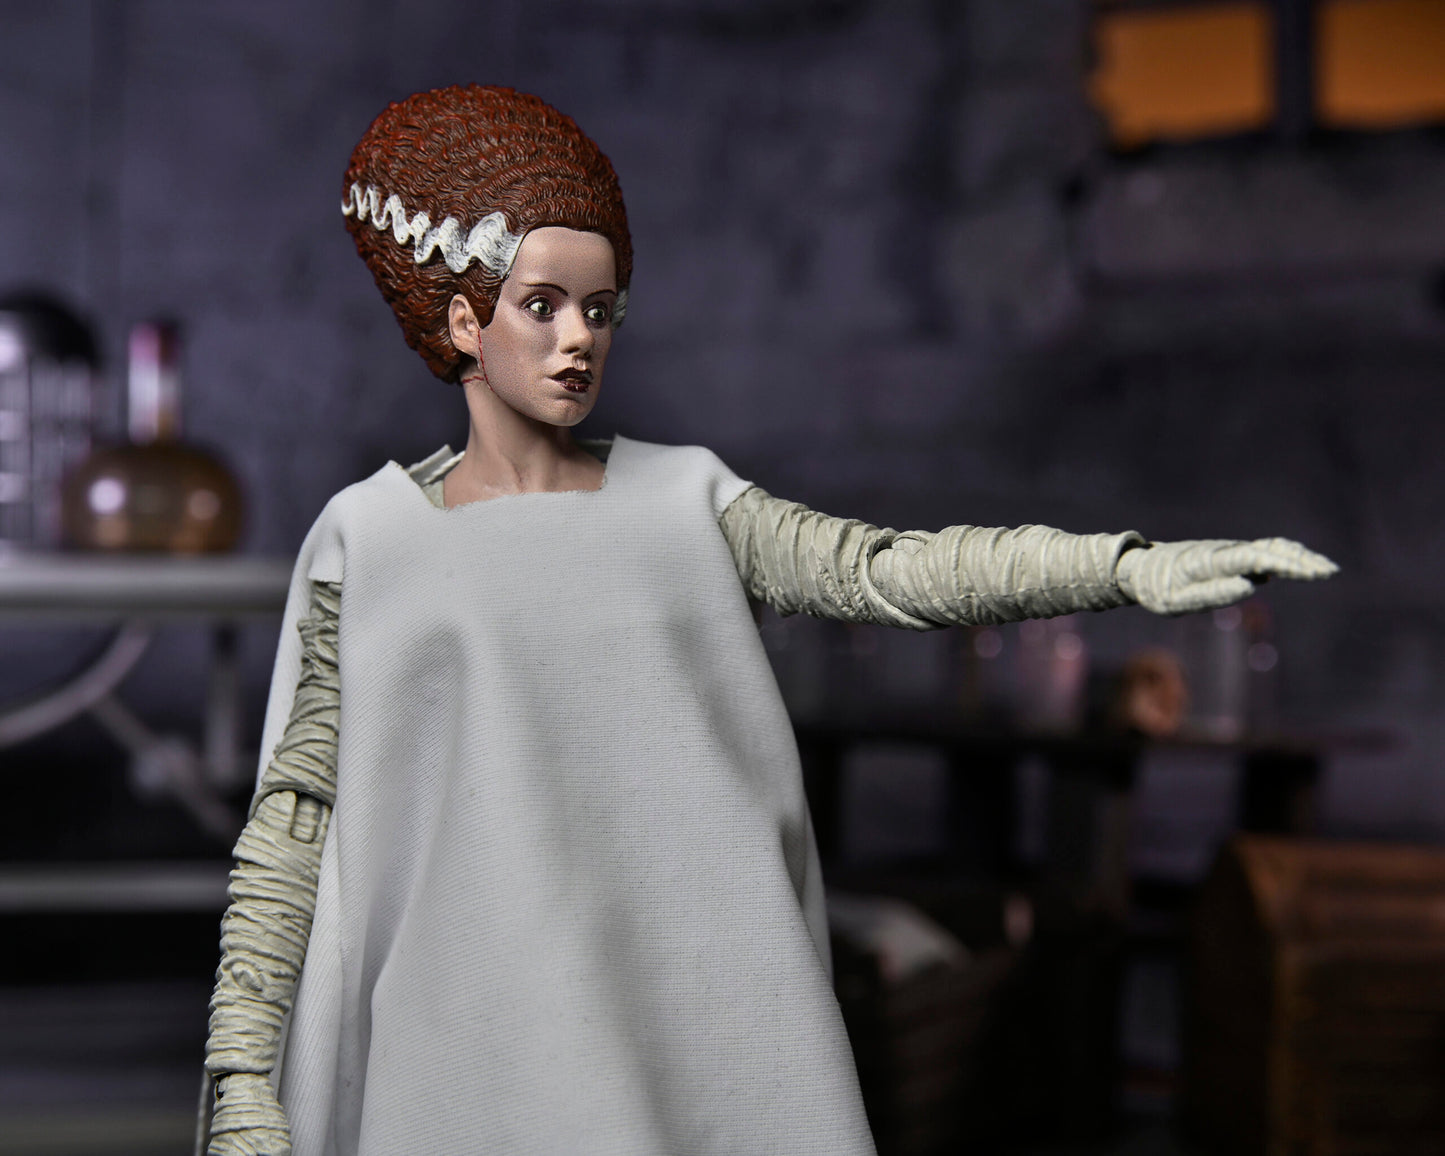 Universal Monsters 7” Scale Action Figure – Ultimate Bride of Frankenstein (Color)